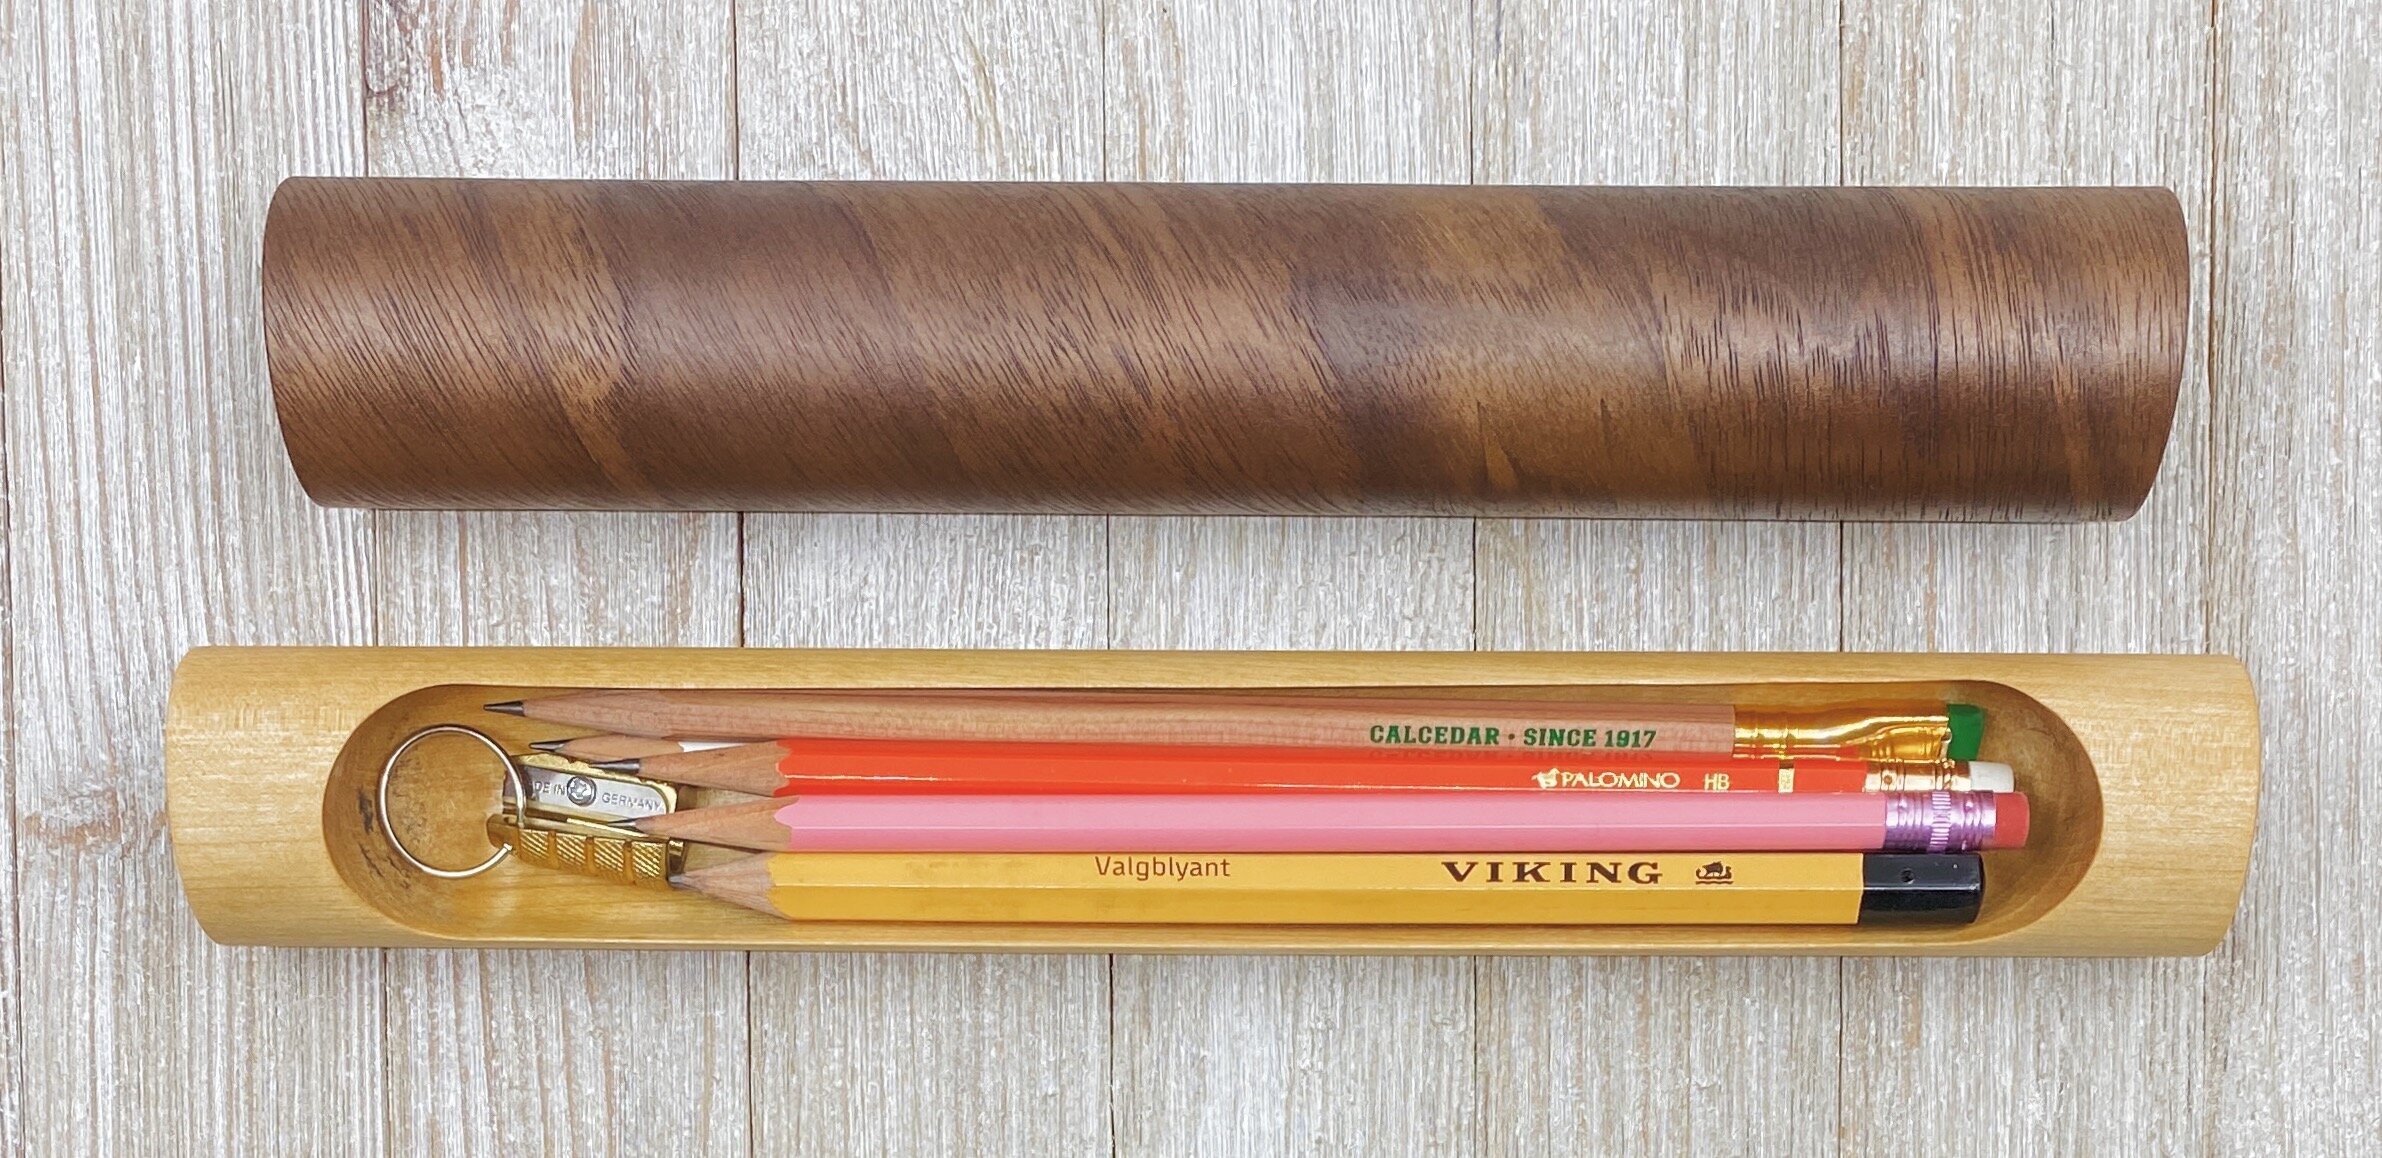 Pencil Case Review and Comparison